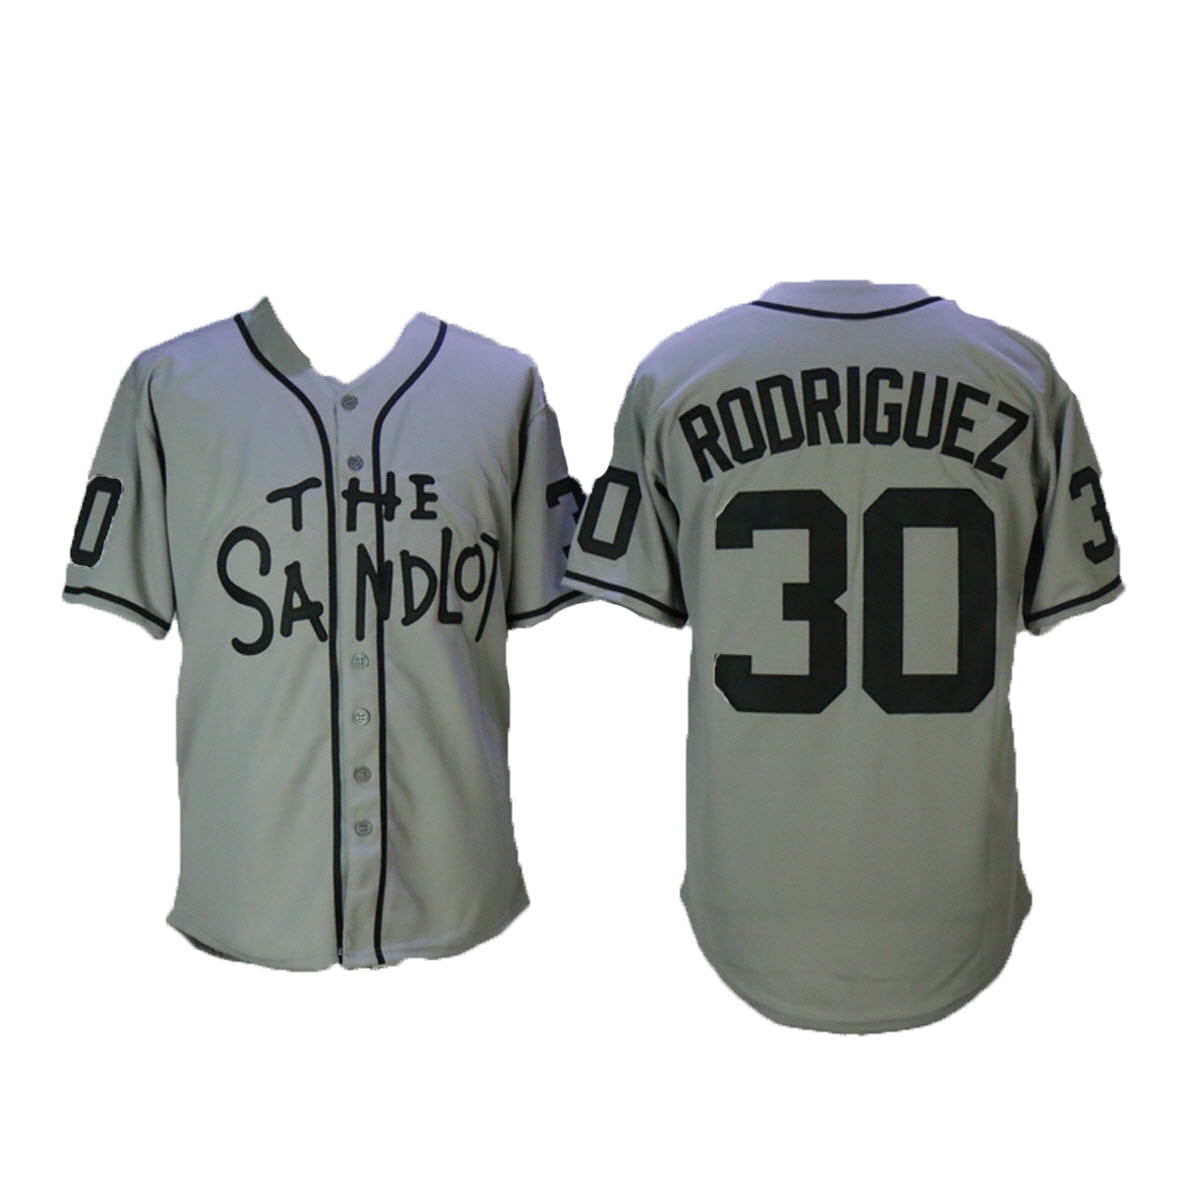 Benny The Jet Rodriguez 30 The Sandlot Baseball Jersey Costume Movie Uniform